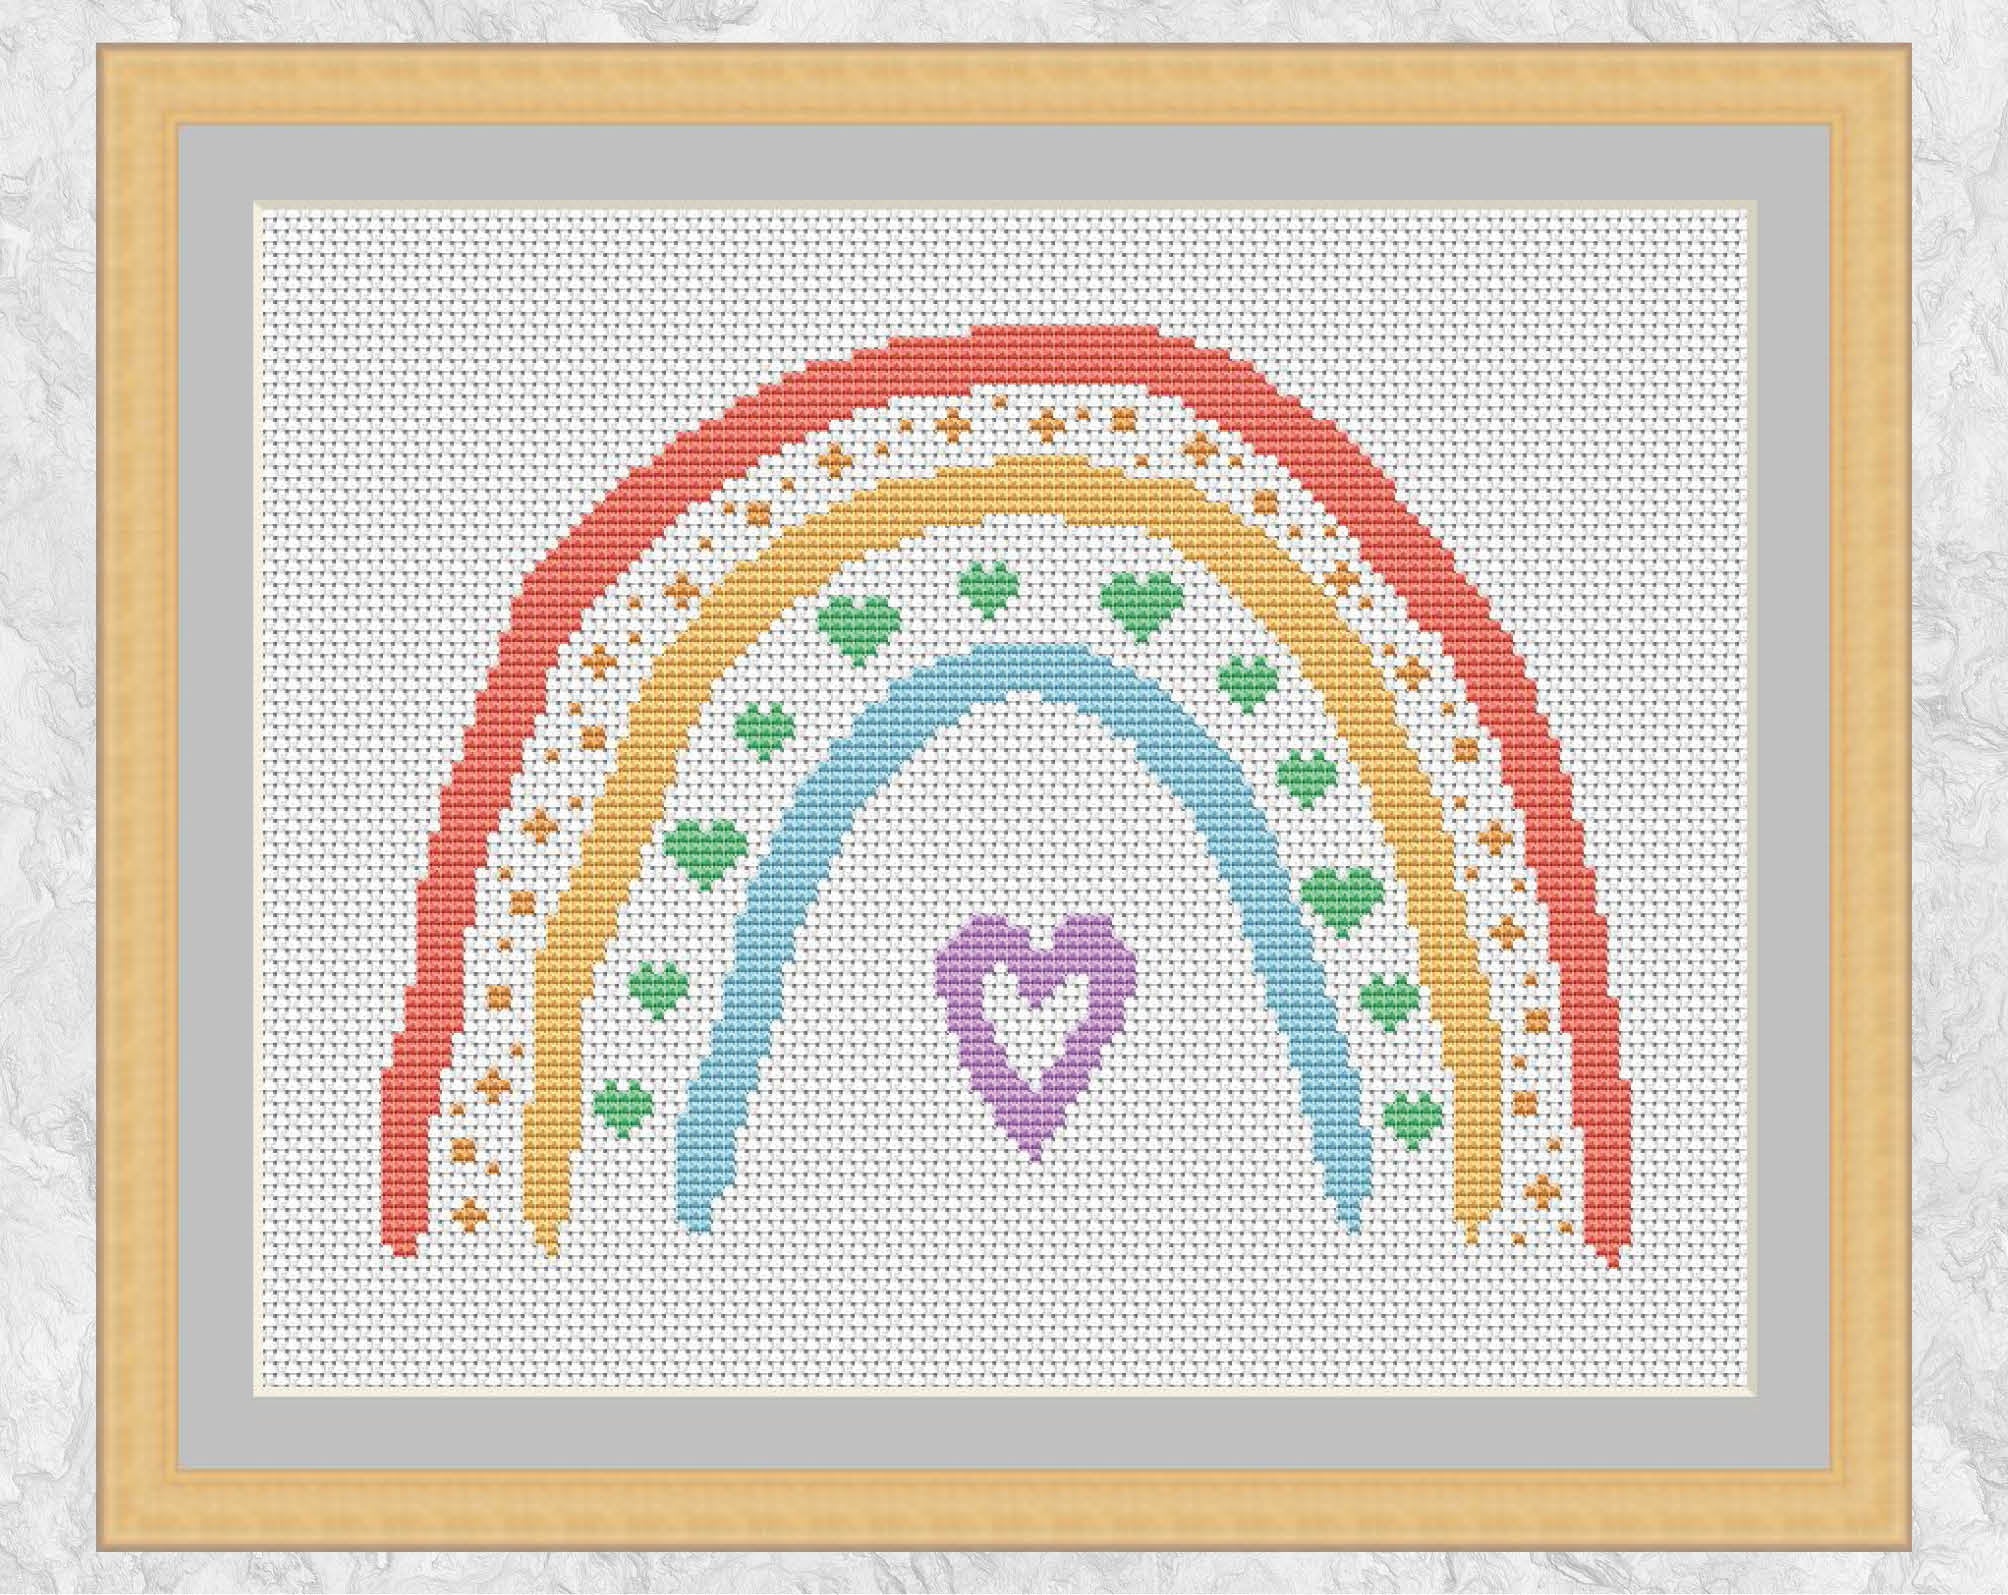 Hearts Boho Rainbow cross stitch pattern - with frame